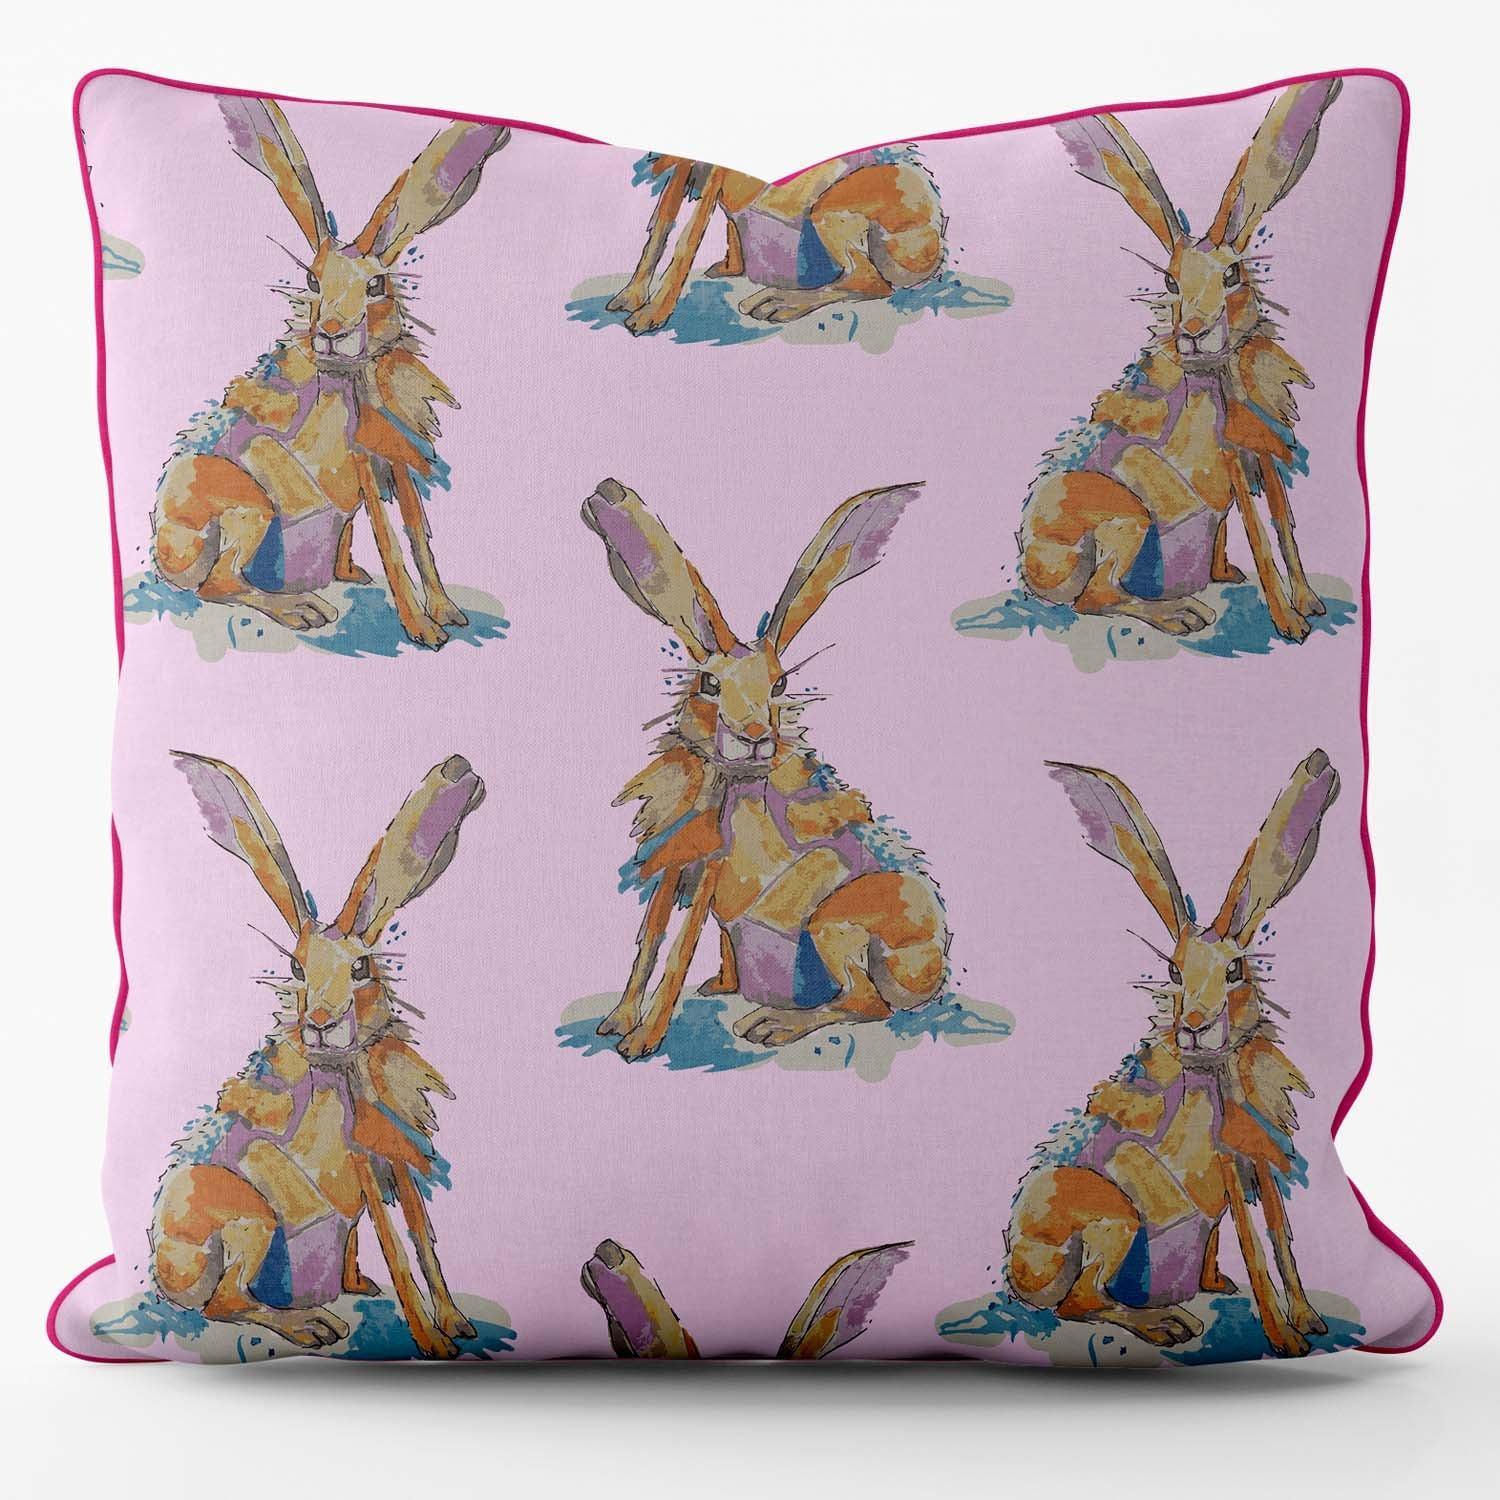 Hare -Their Nibs Cushion - Handmade Cushions UK - WeLoveCushions